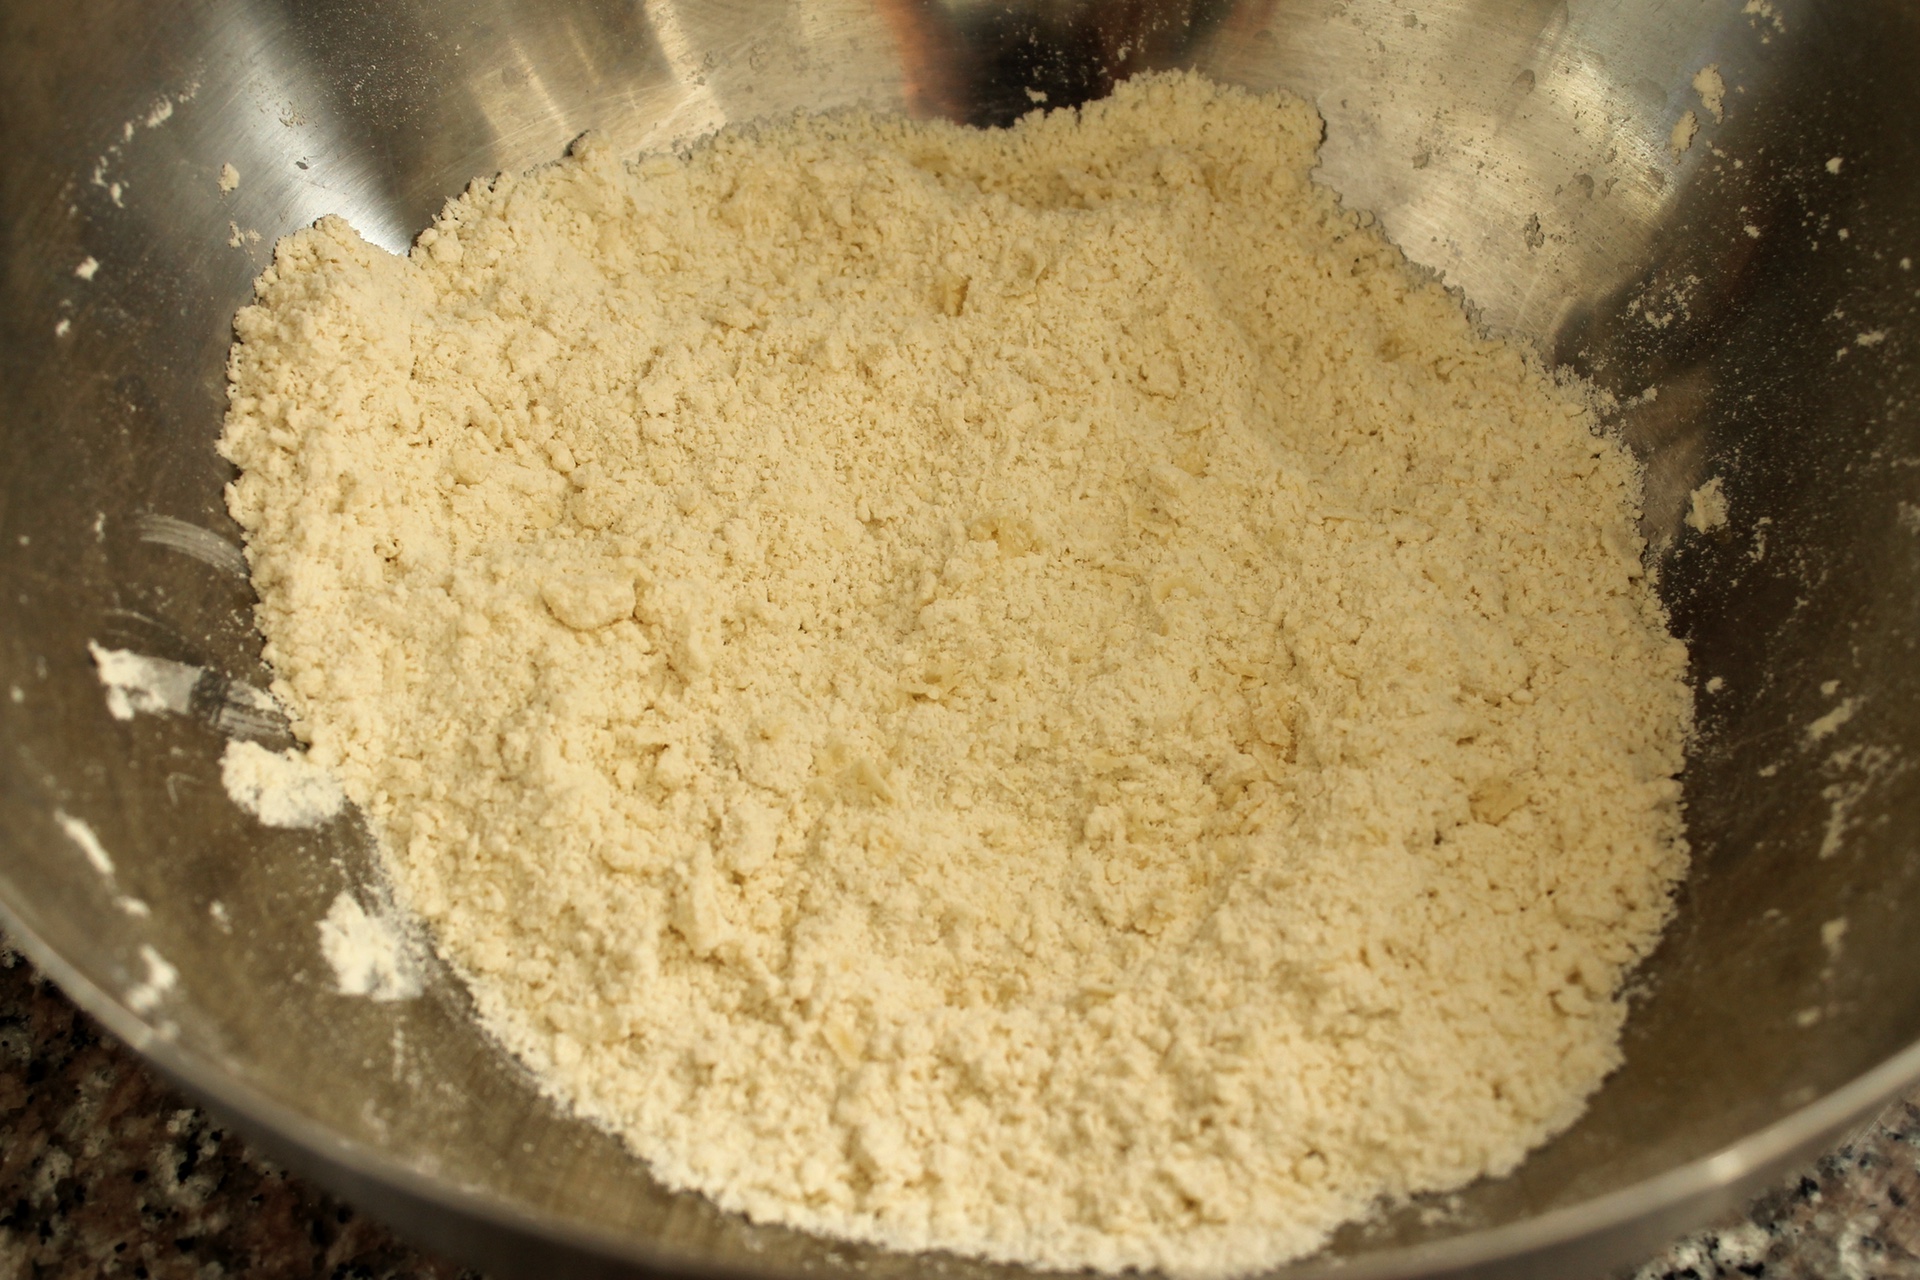 Rub the lard evenly into the flour.